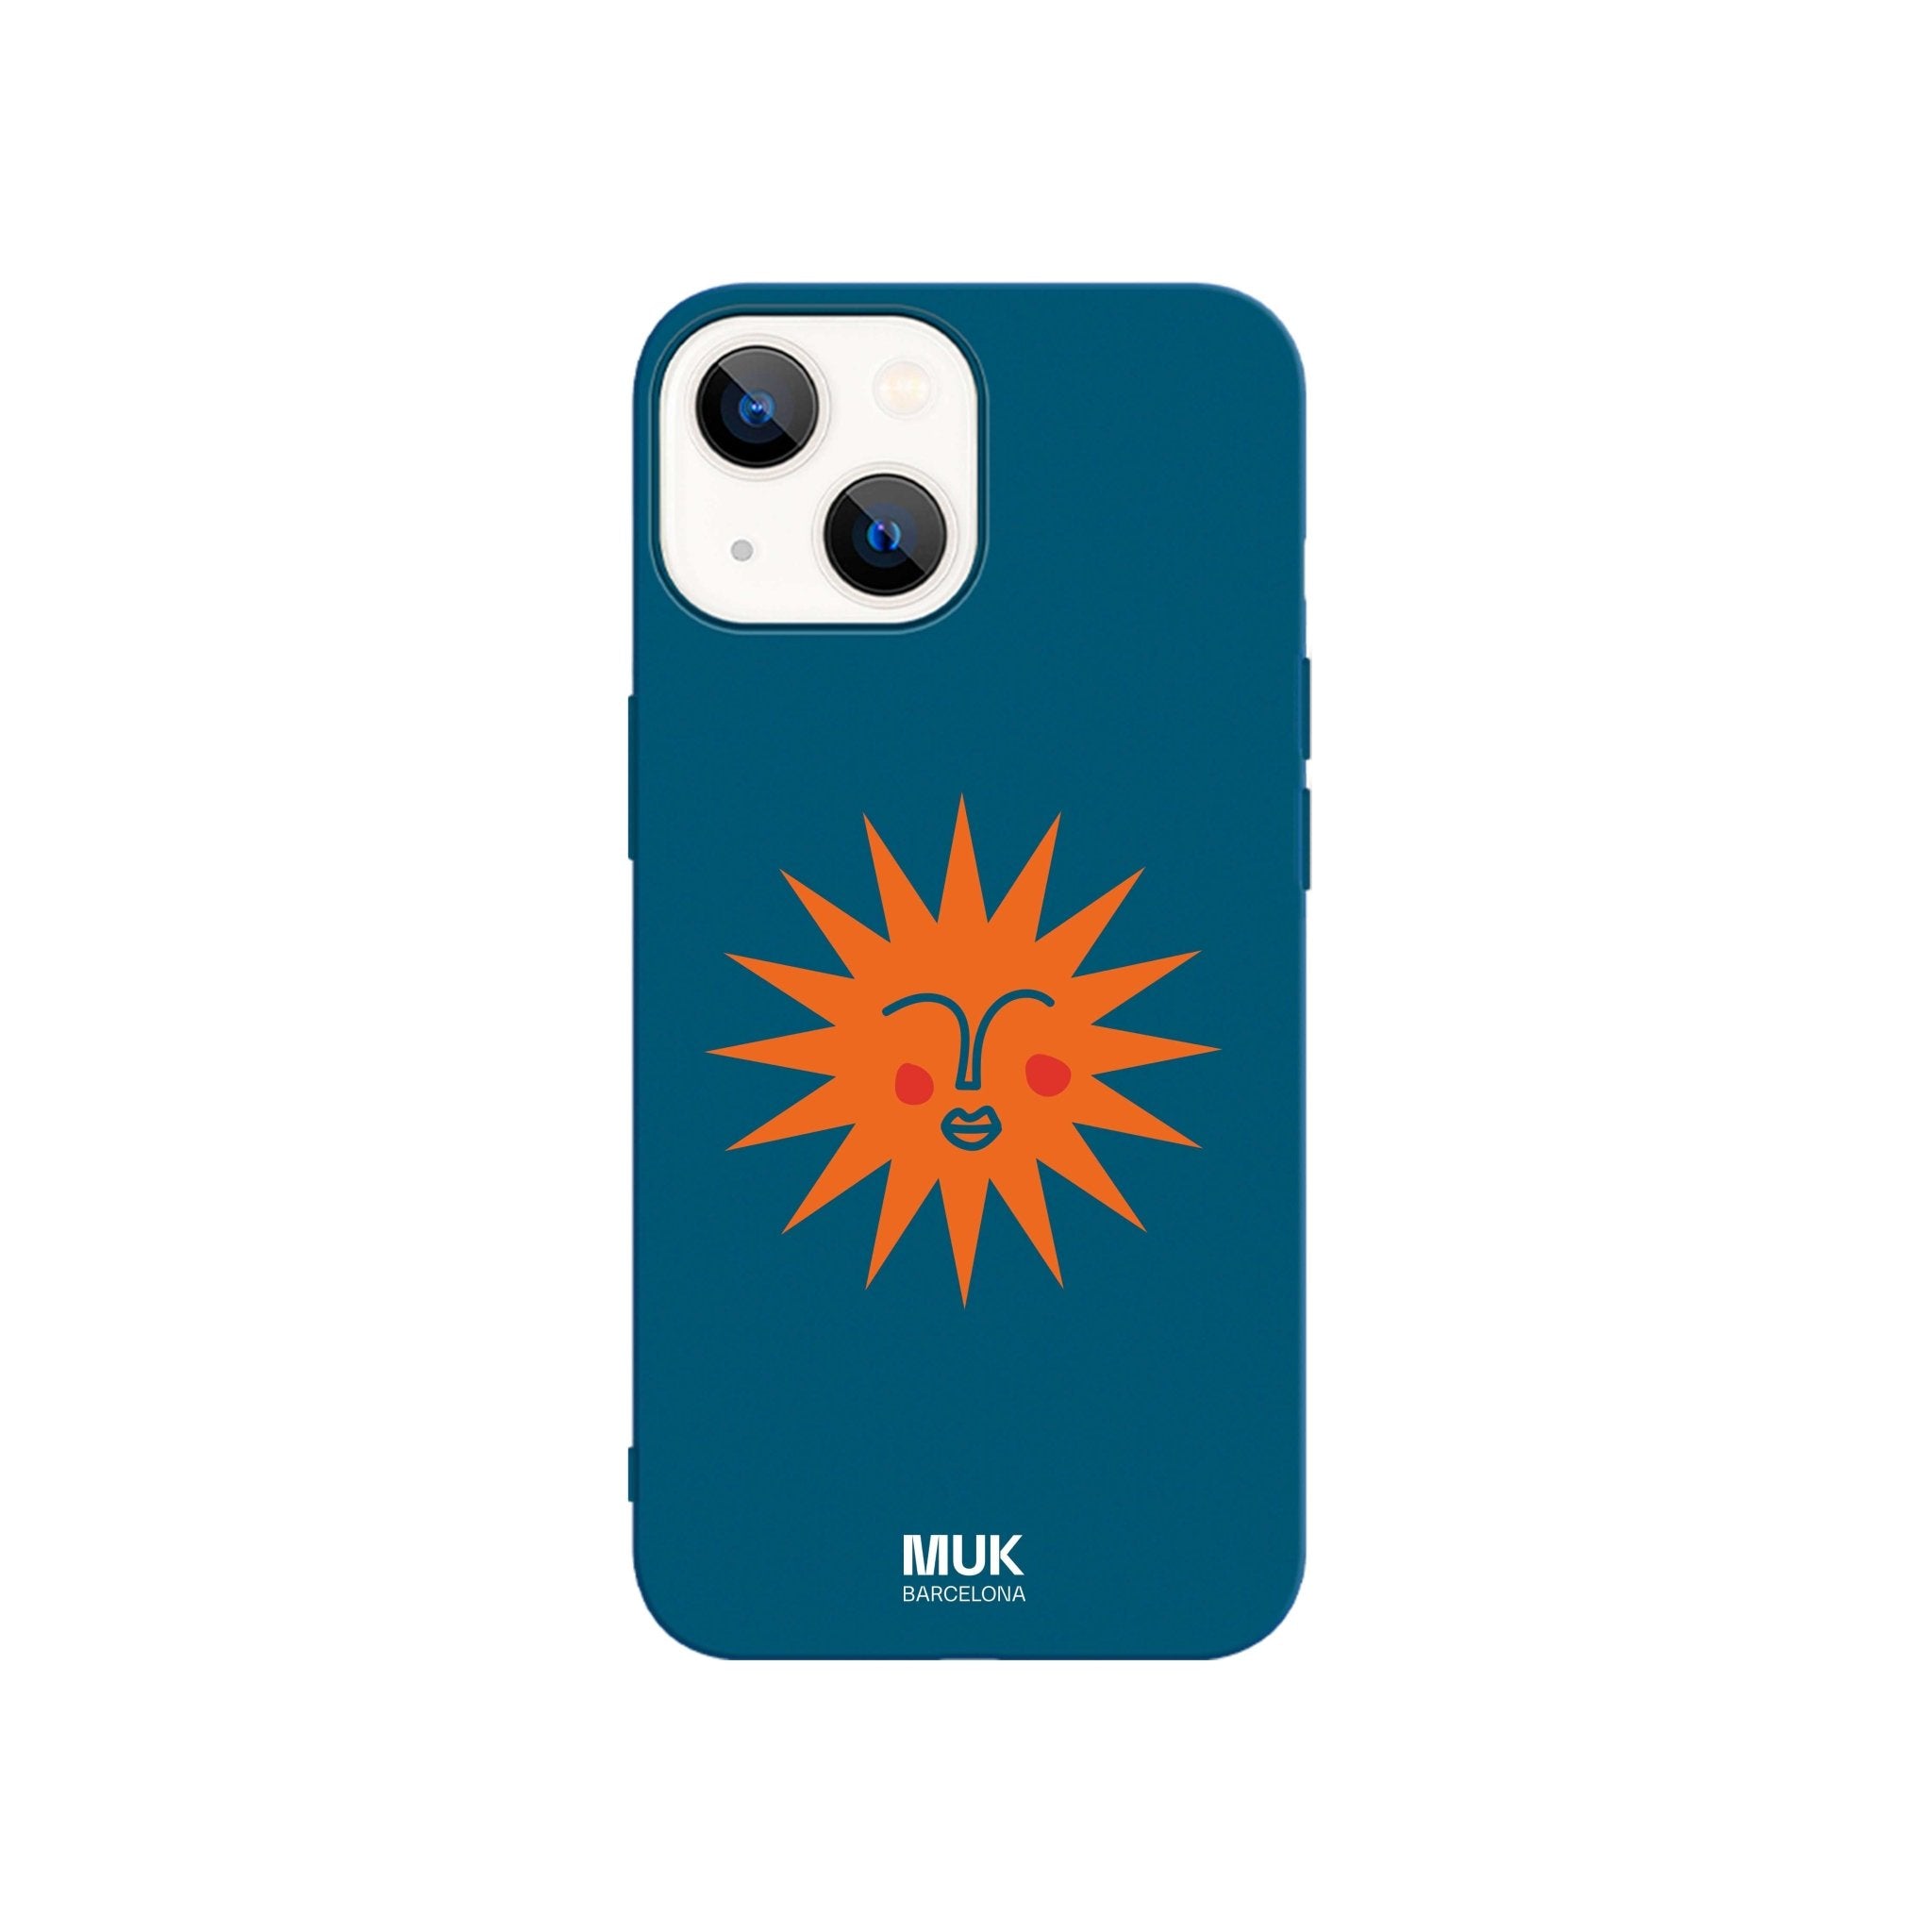 Funda de móvil TPU azul con diseño de sol en color naranja.
